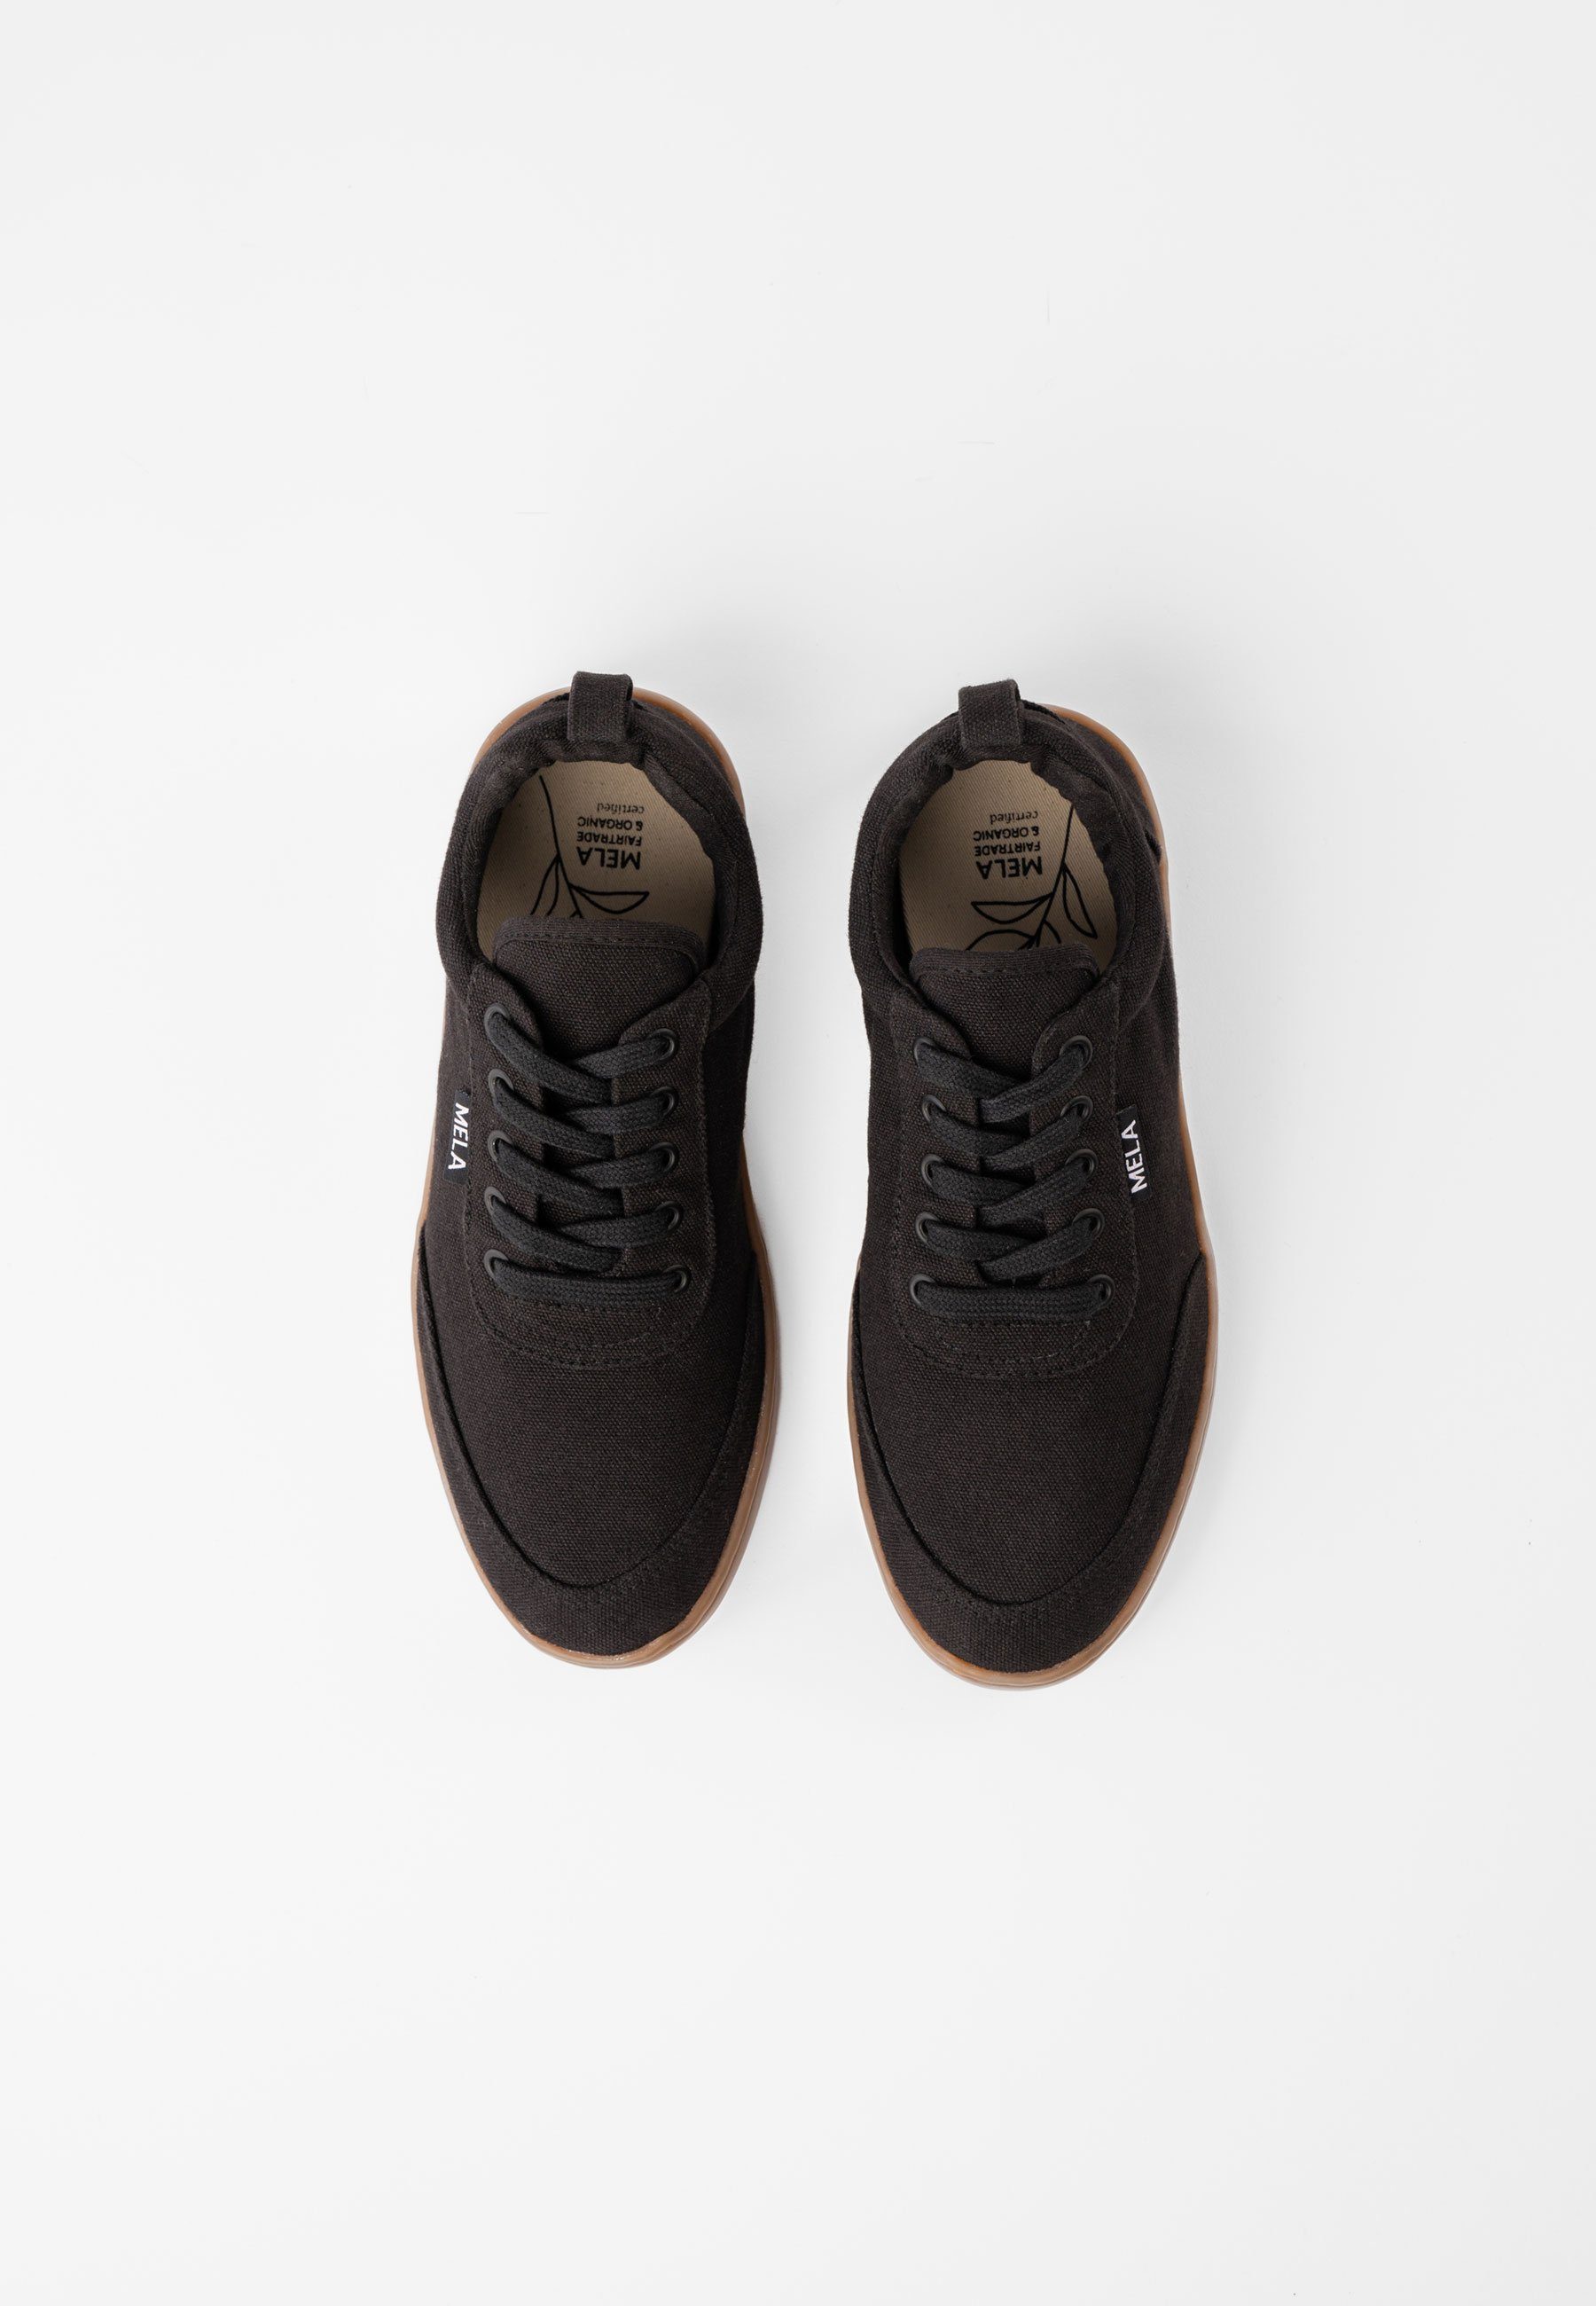 MELA Damen Sneaker YALA / Sneaker Paar zusätzlichem schwarz Schnürsenkel gum inklusive